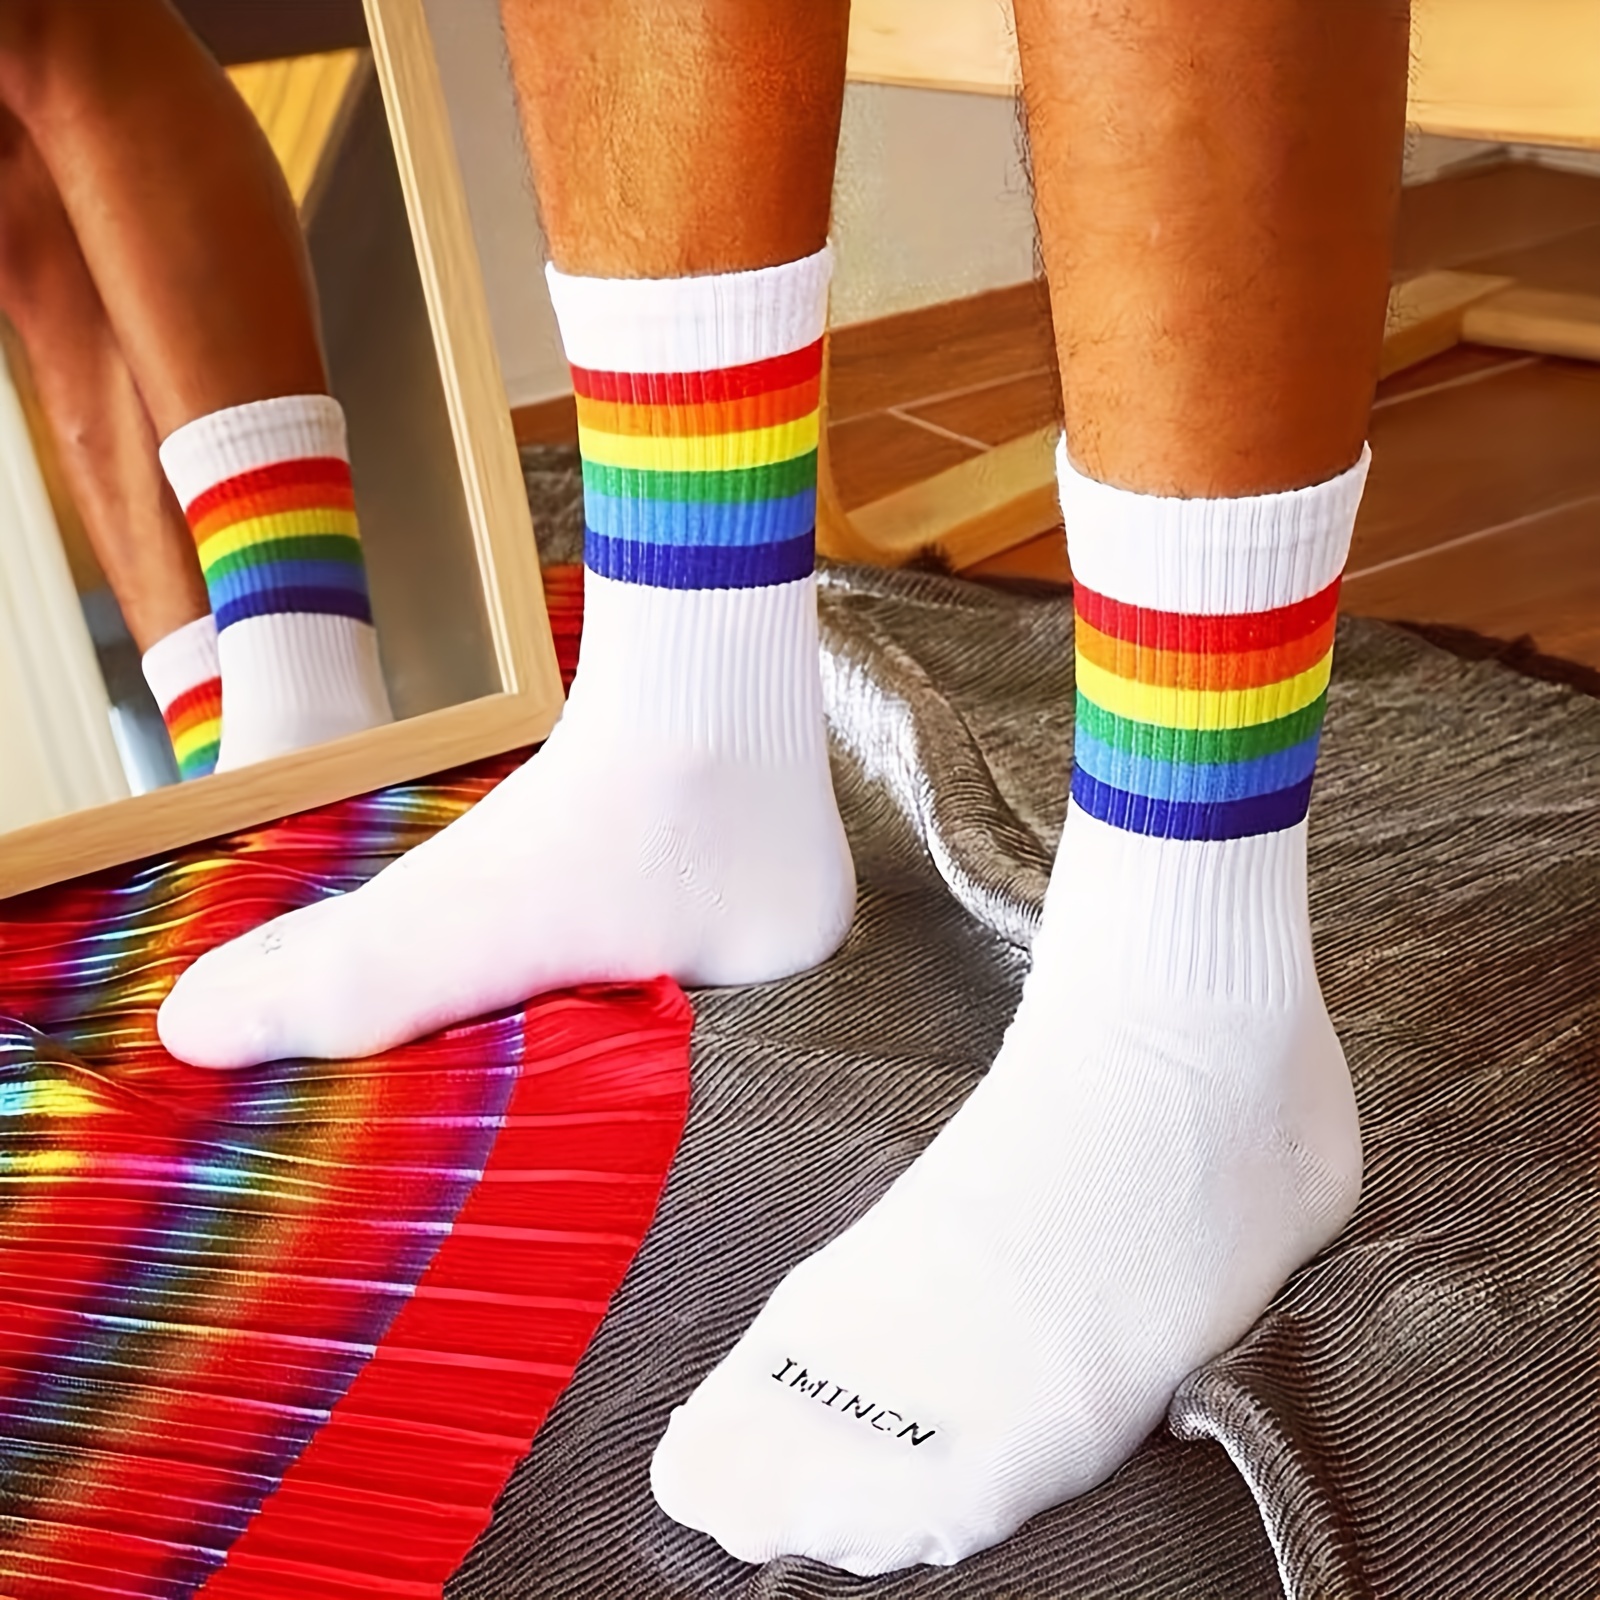 Rainbow Knee Socks  Striped Pride Socks for Women - Cute But Crazy Socks